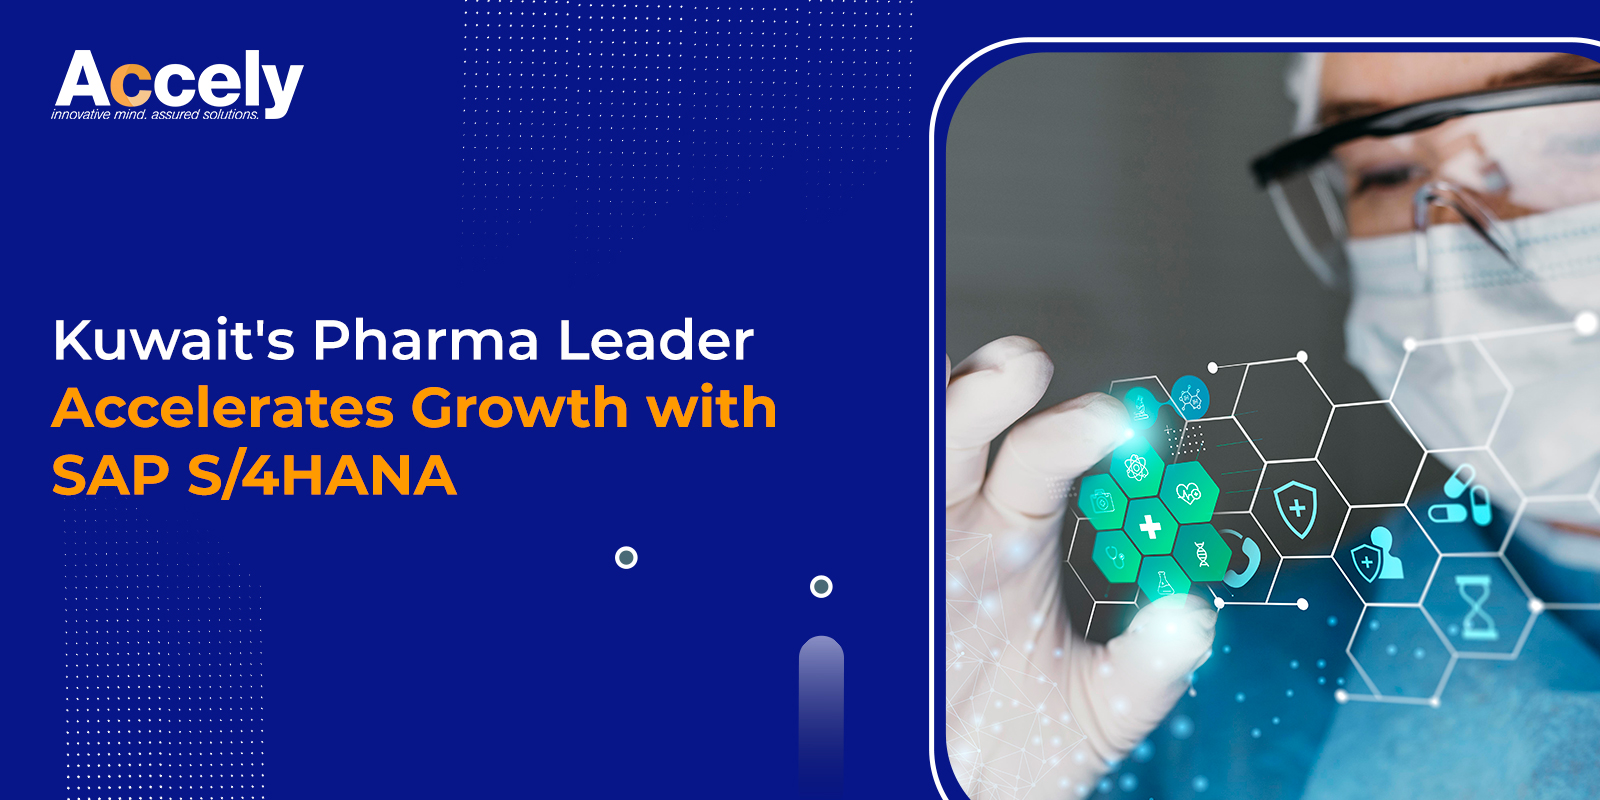 Kuwait's Pharma Leader Accelerates Growth with SAP S/4HANA